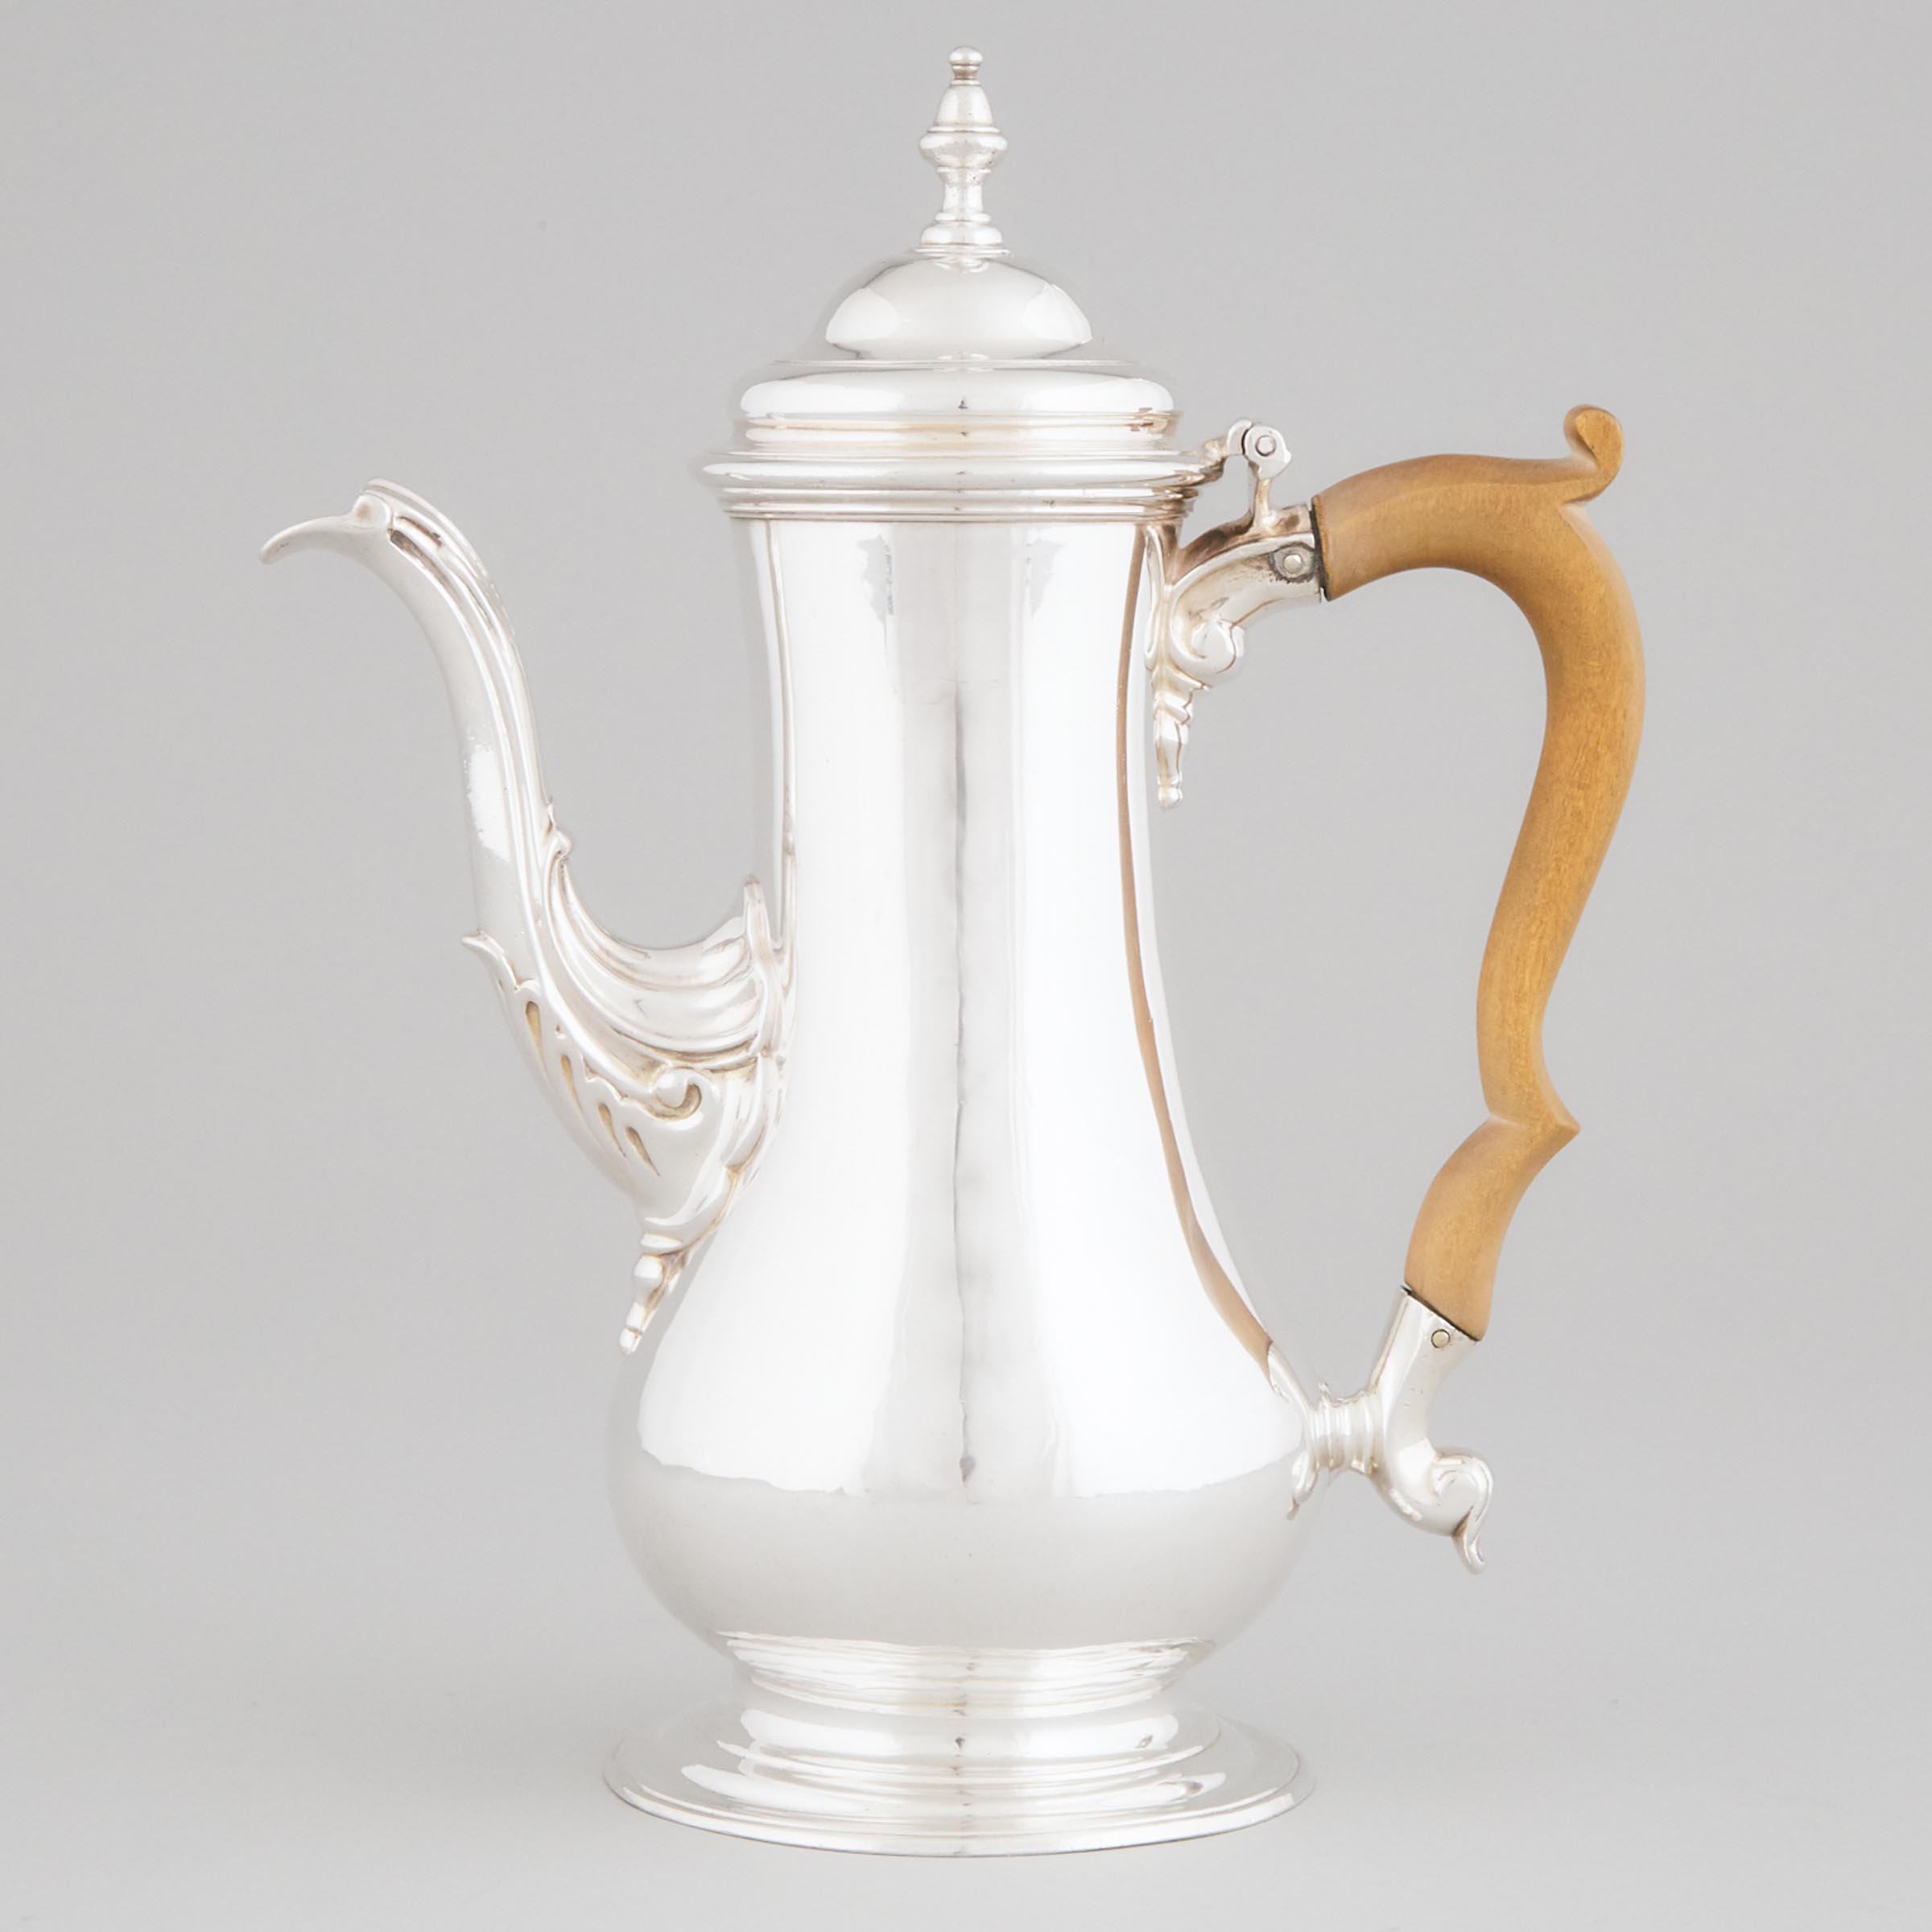 George III Silver Coffee Pot, Thomas Whipham & Charles Wright, London, 1763